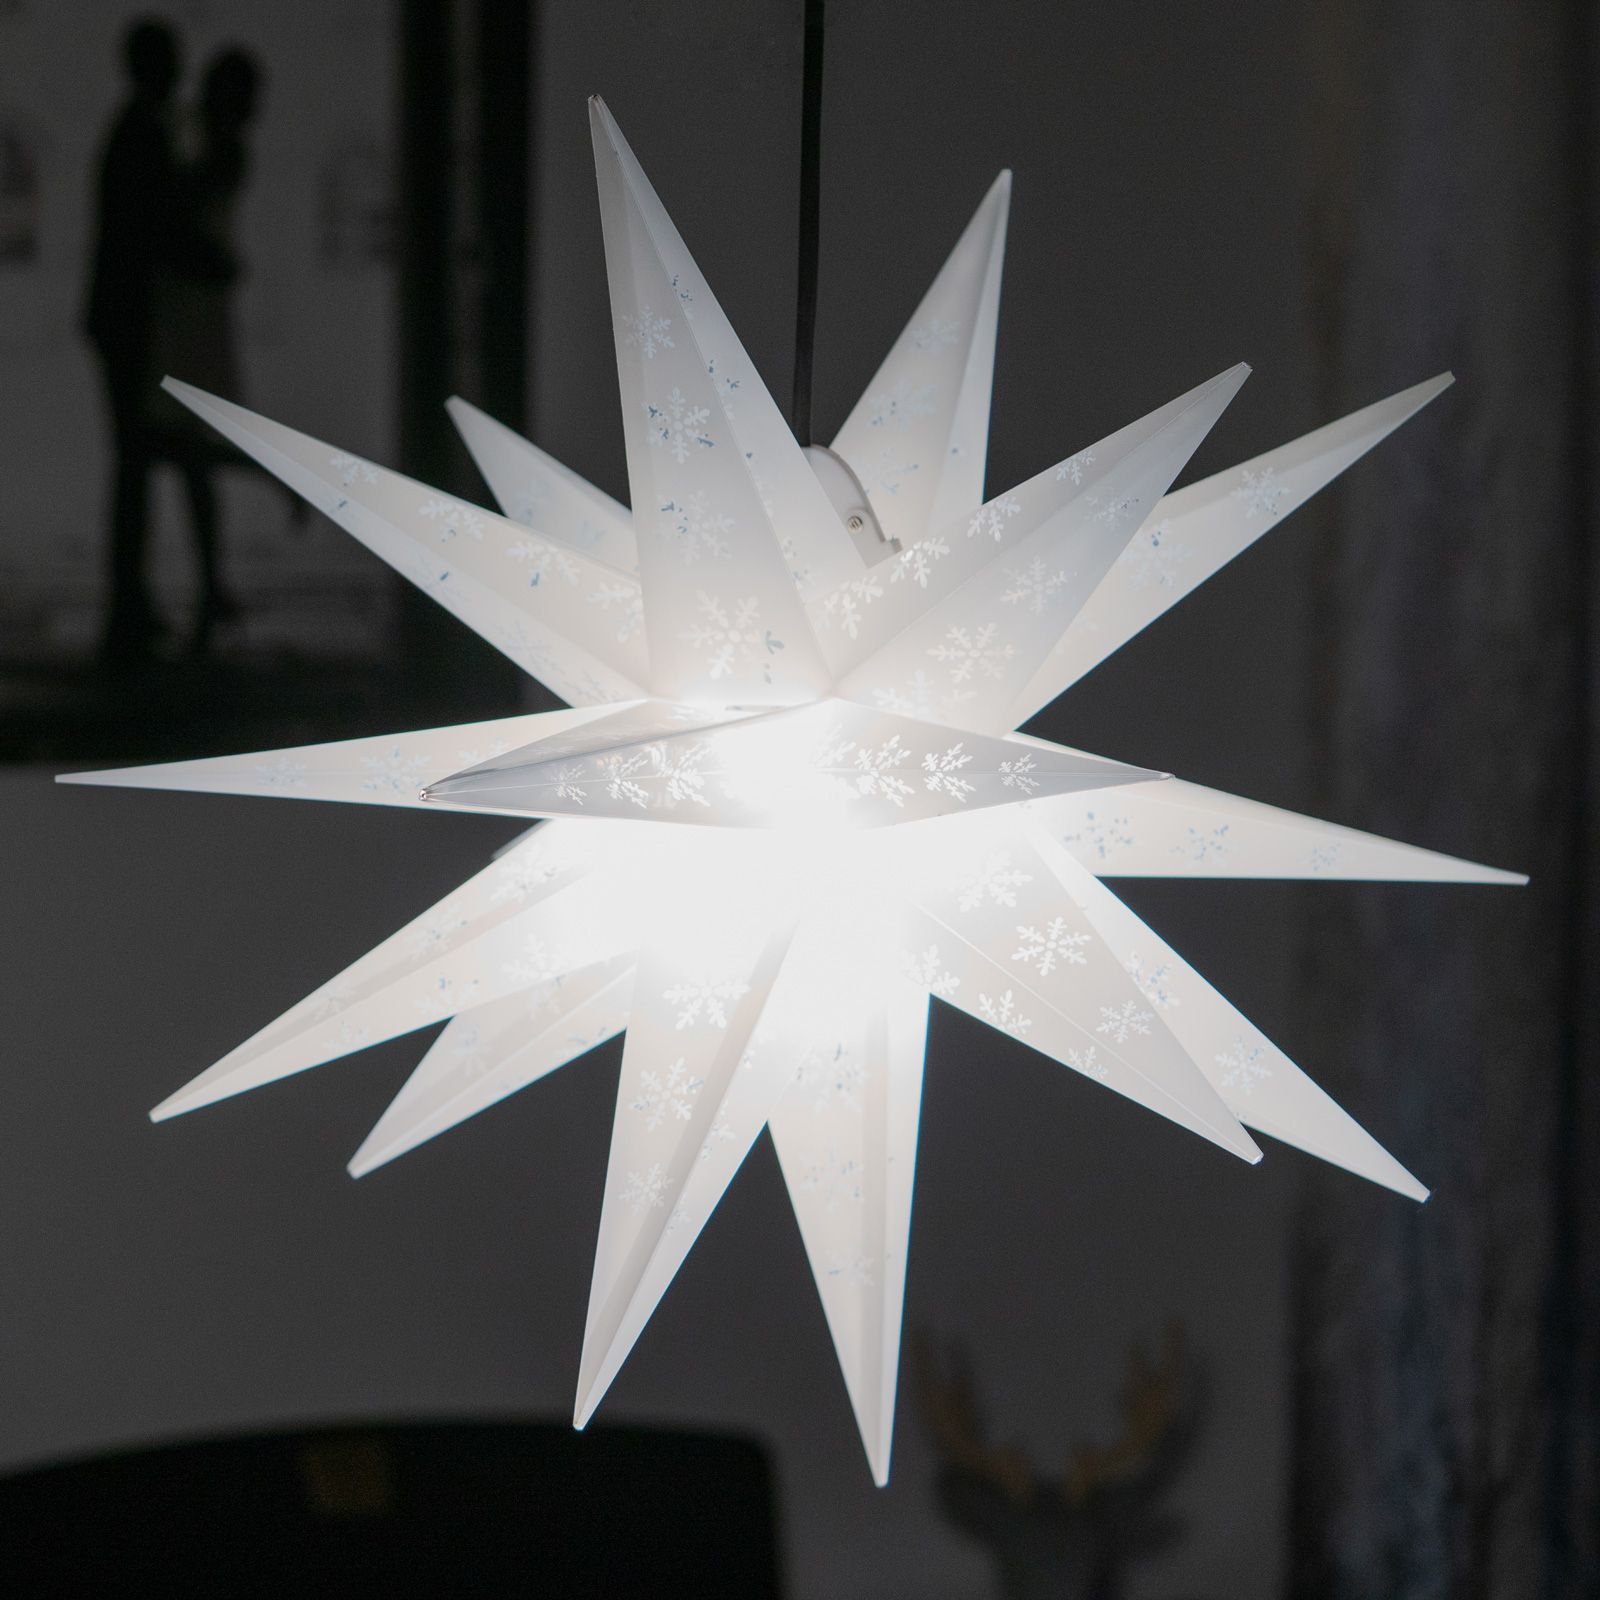 Estrella copo de nieve exterior, 18 puntas impresa